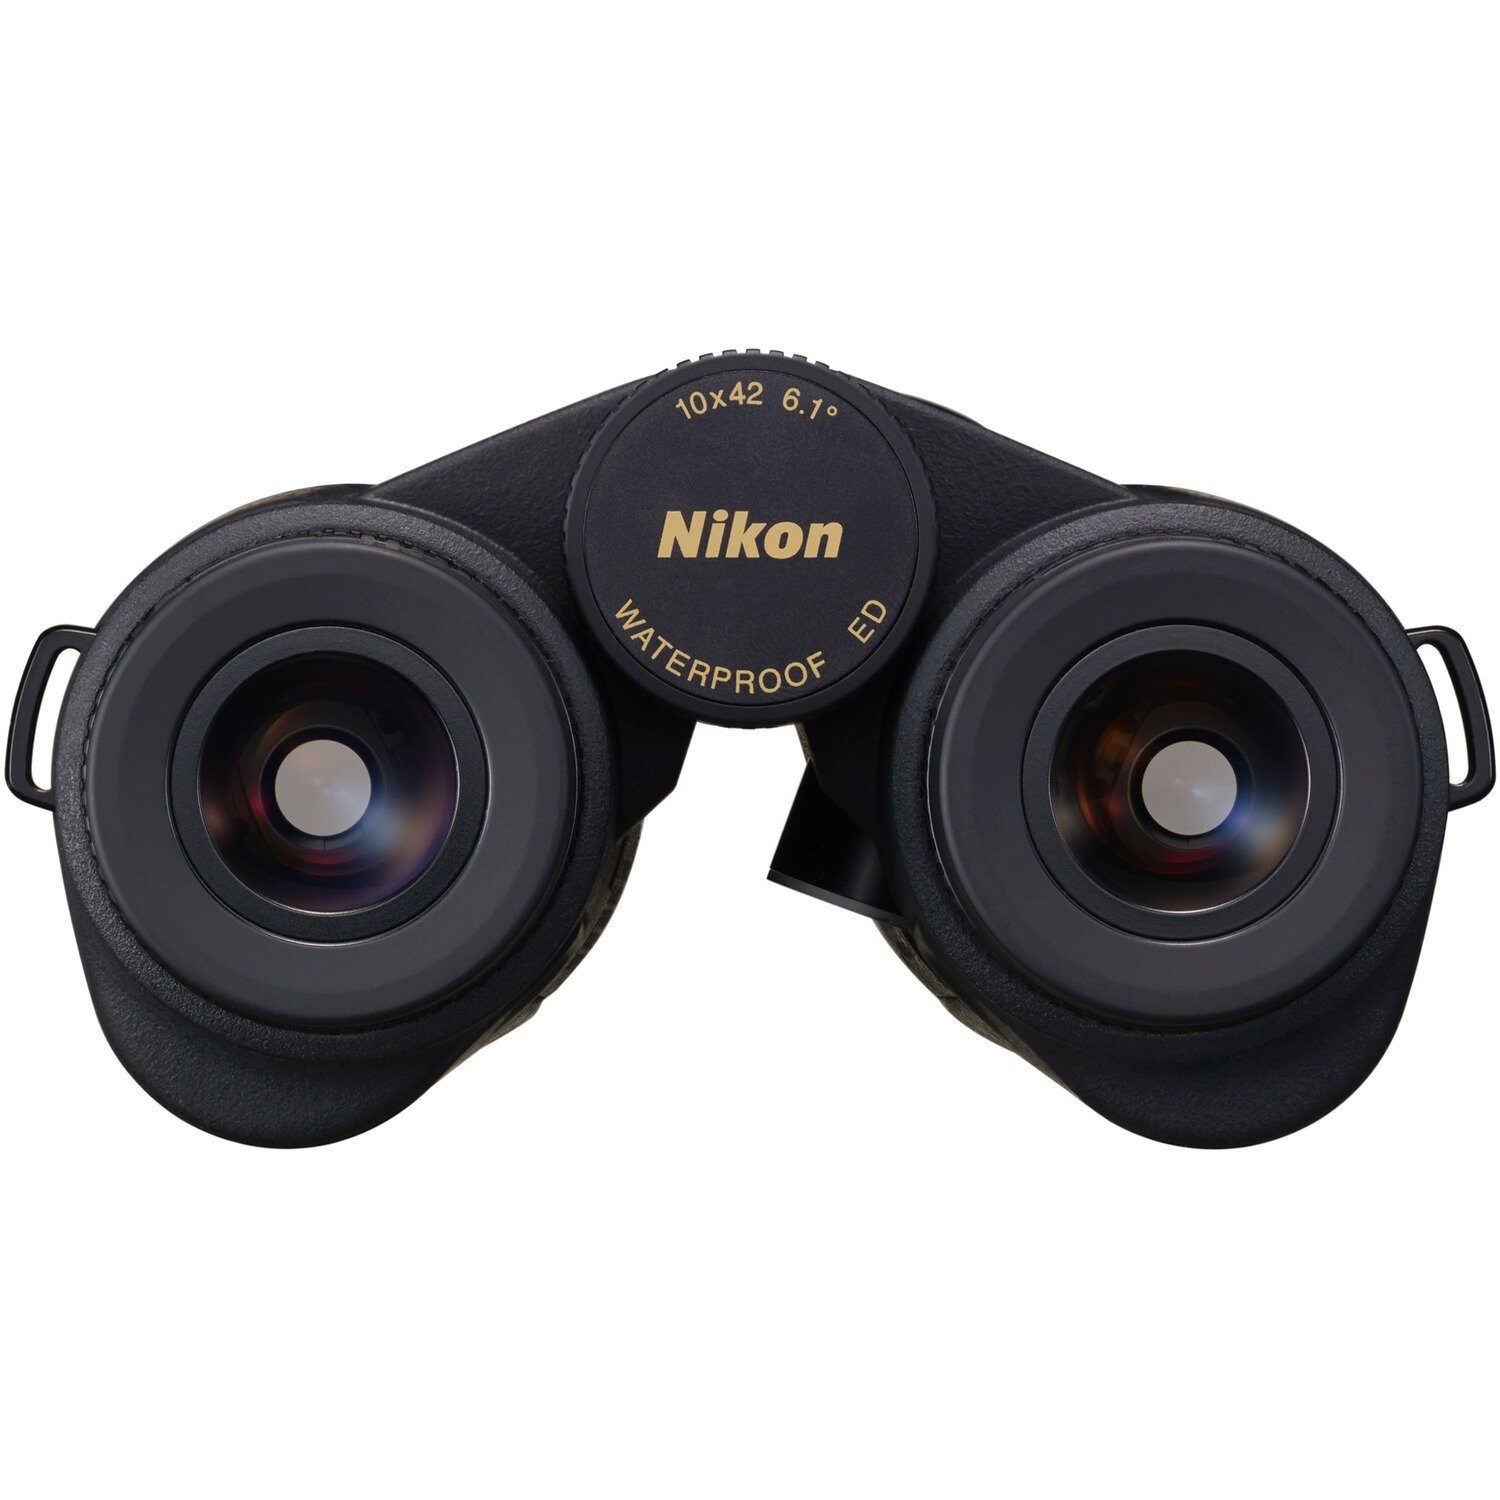 Fernglas Fernglas 10x42 mit Entfernungsmesser Nikon Laserforce